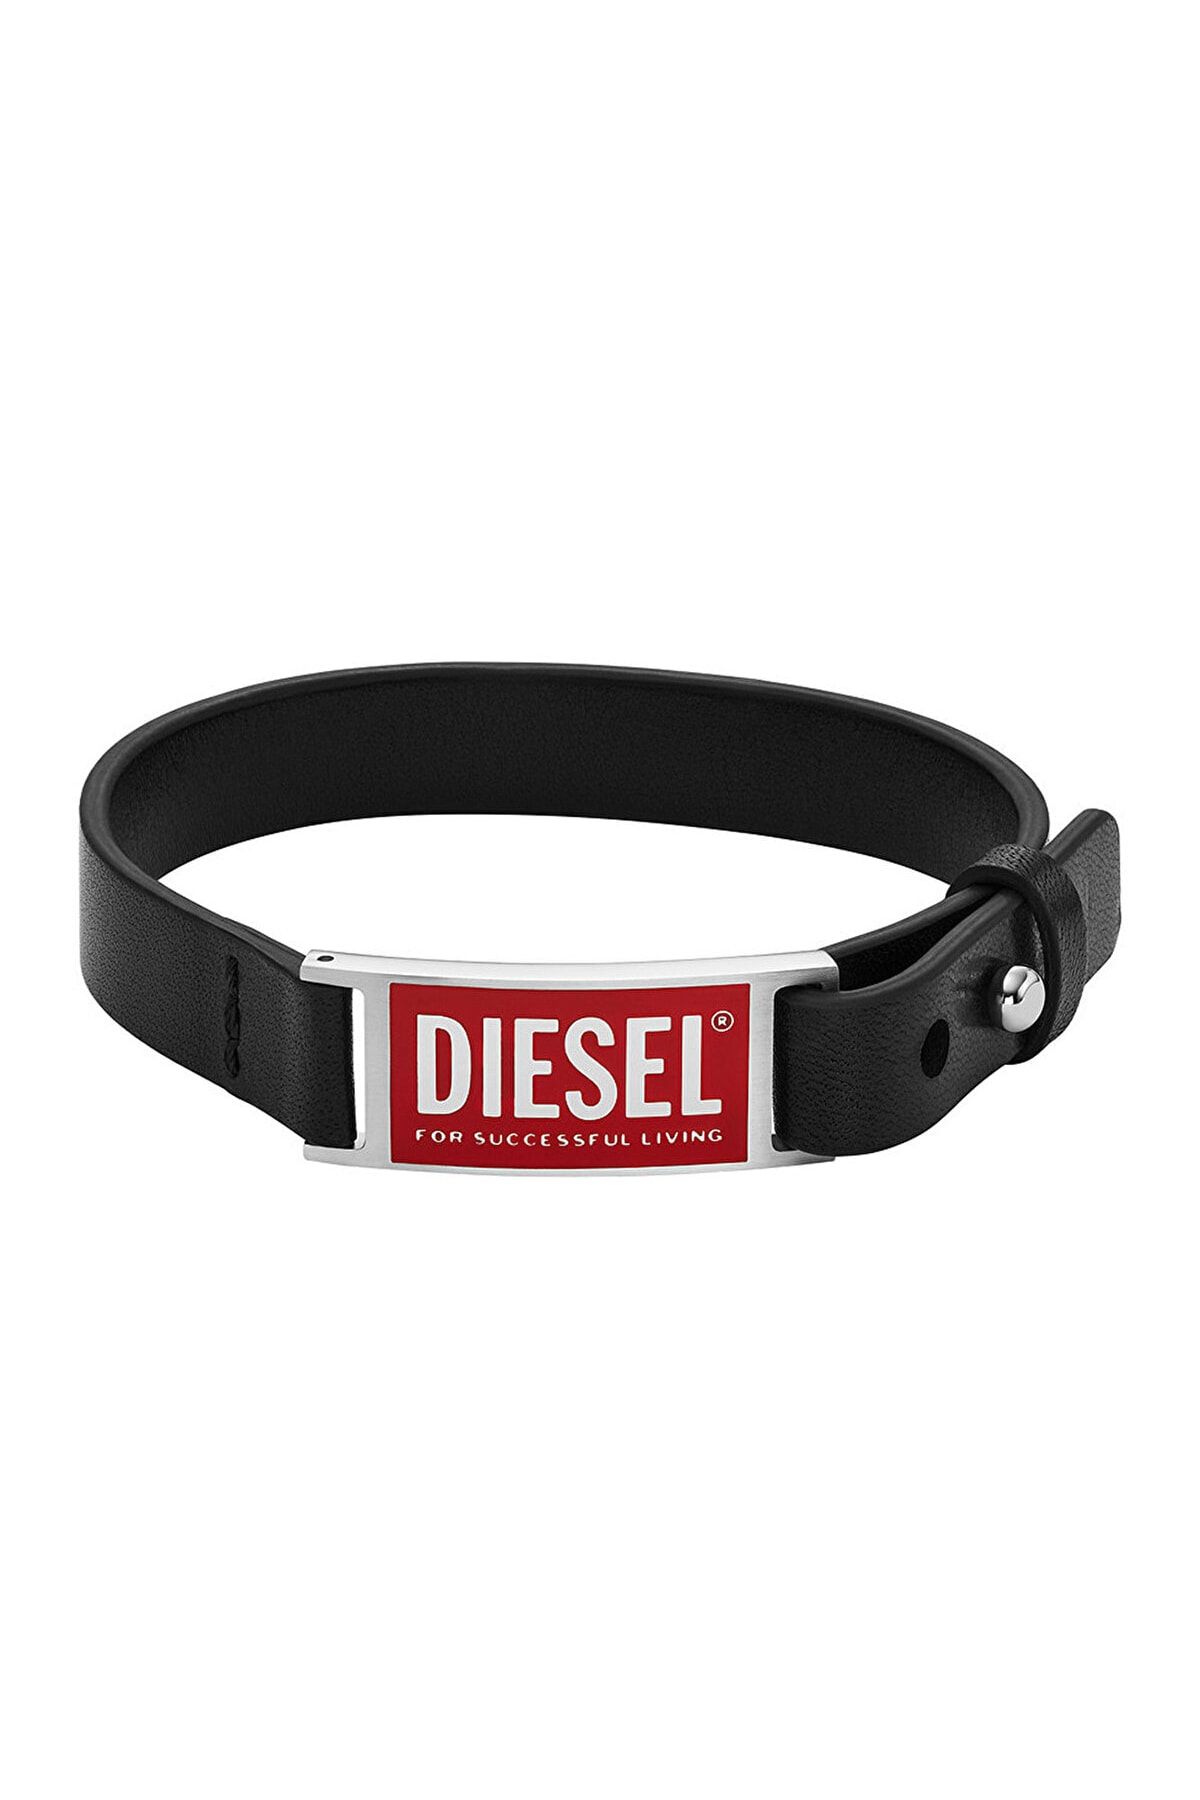 Diesel Djdx1370-040 Erkek Bileklik